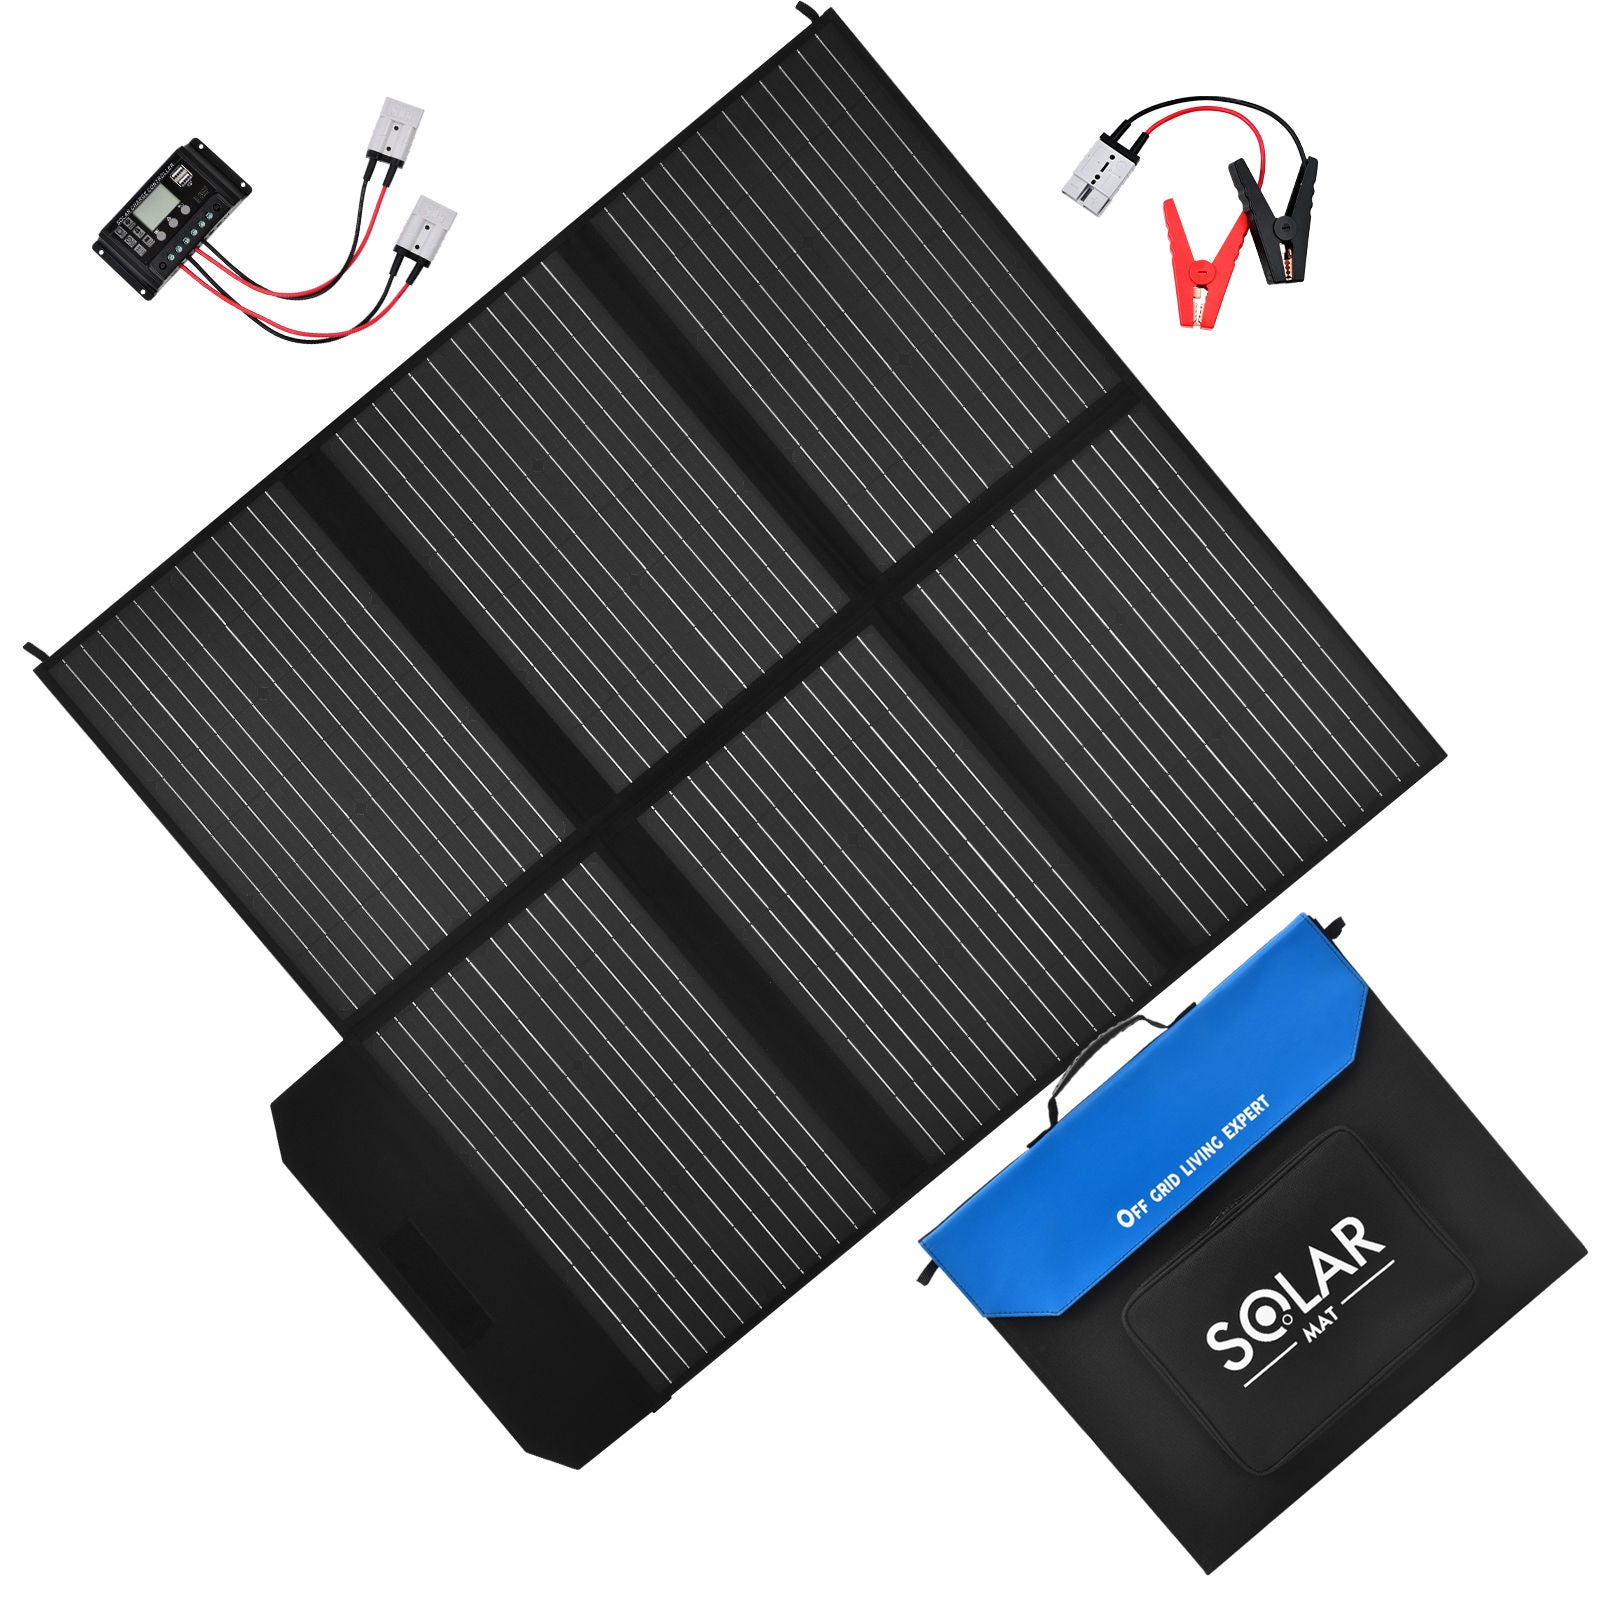 Acemor 12V 380W Portable Foldable Solar Panel Blanket High-Efficiency Monocrystalline with USB Solar Regulator Power Charger